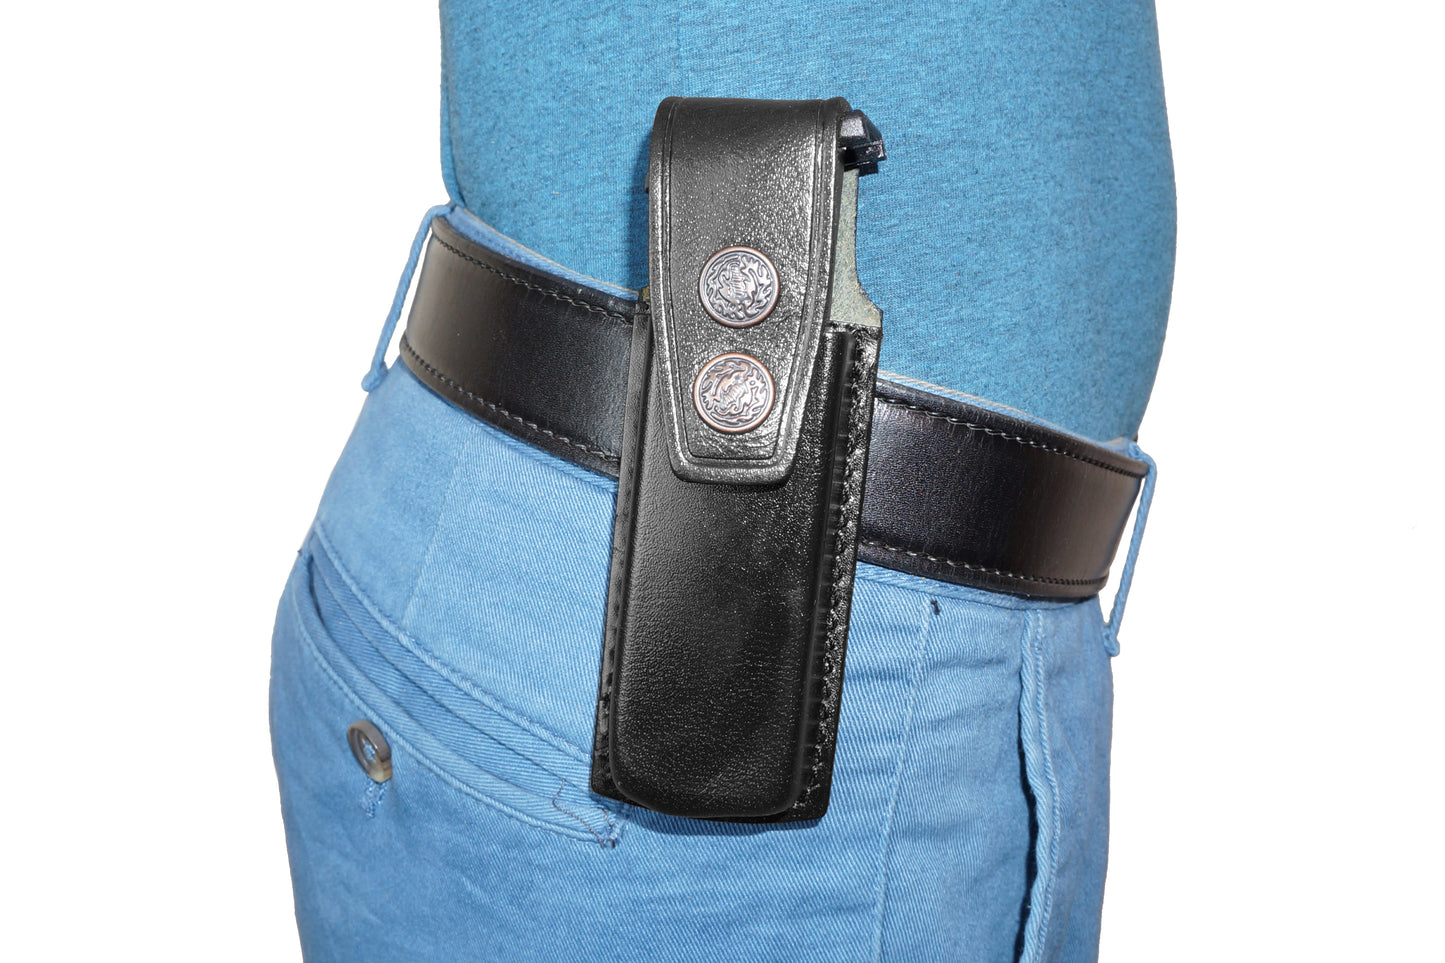 Holster K090 Handmade Leather Single Magazine Pouch/Carrier/Case for Glock 17 19 22 23